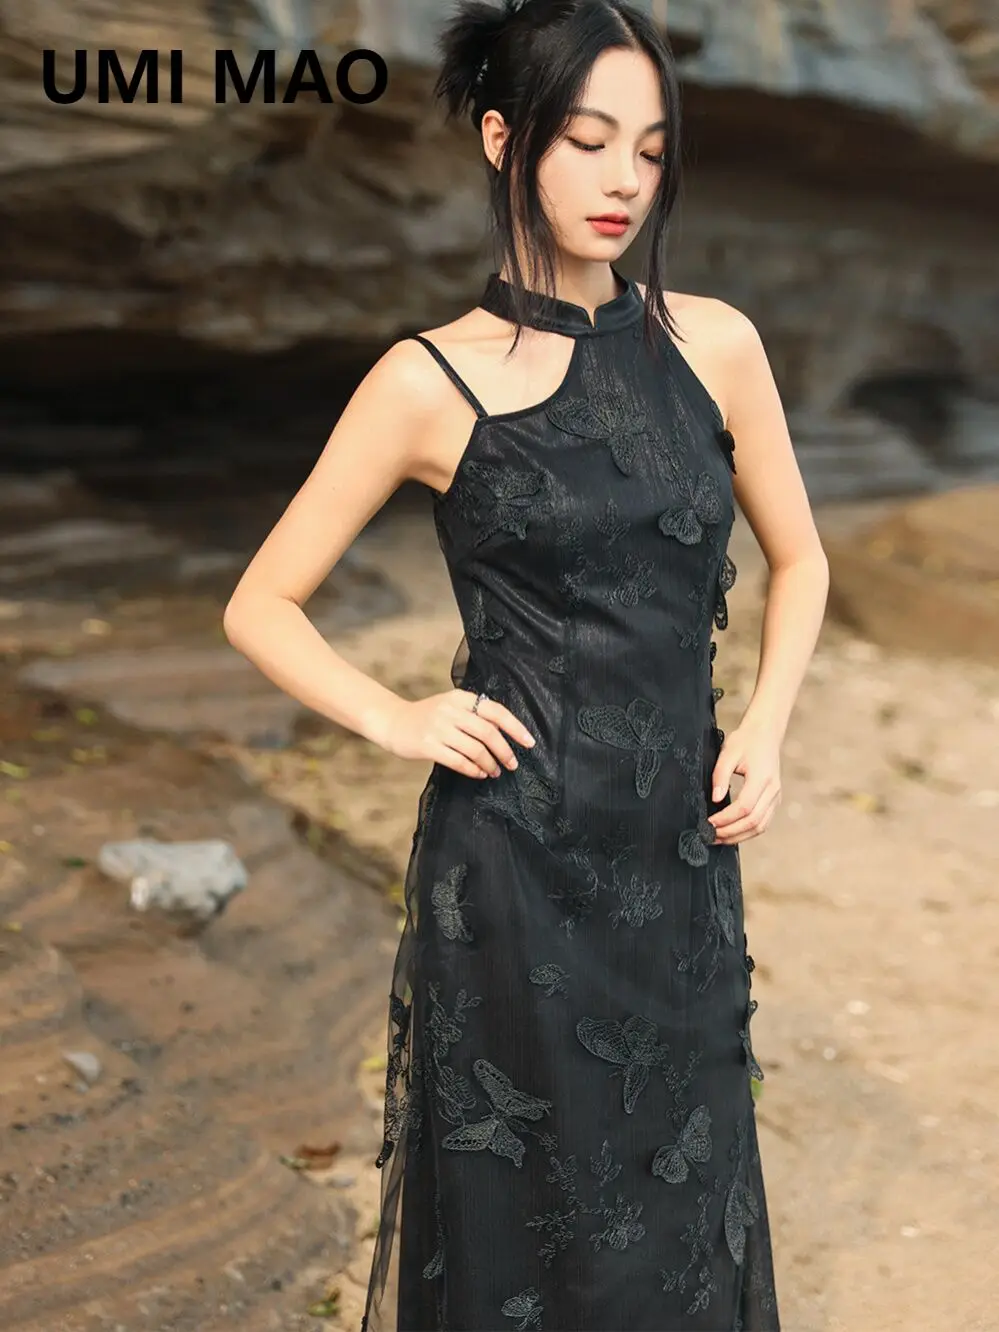 

UMI MAO Cheongsam Dress Elegant For Women's Summer New Chinese Style Black Waistband Three-dimensional Butterfly Long Dresses